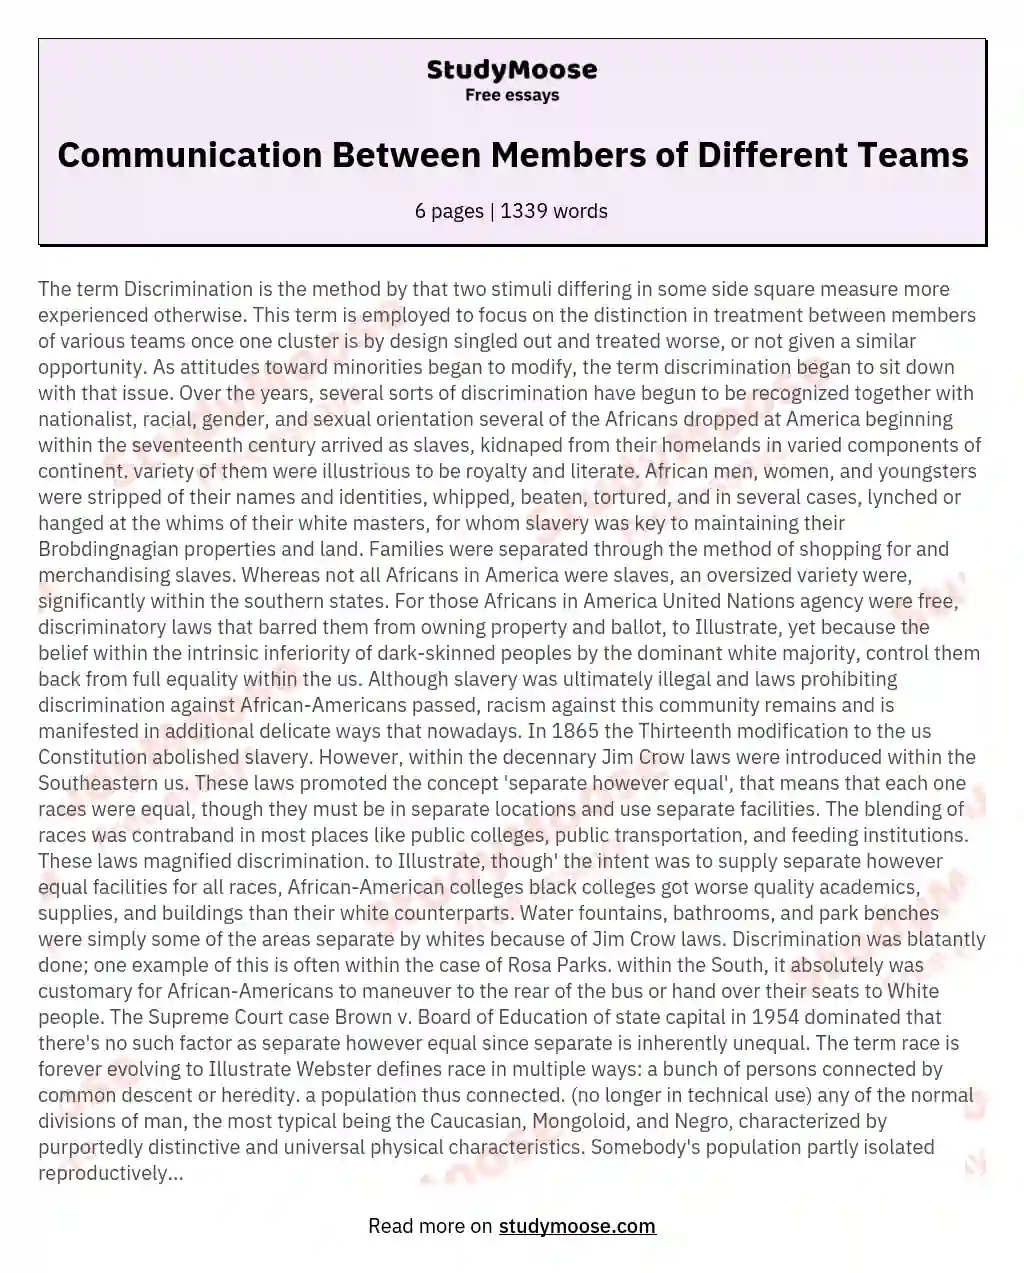 Communication Between Members of Different Teams essay